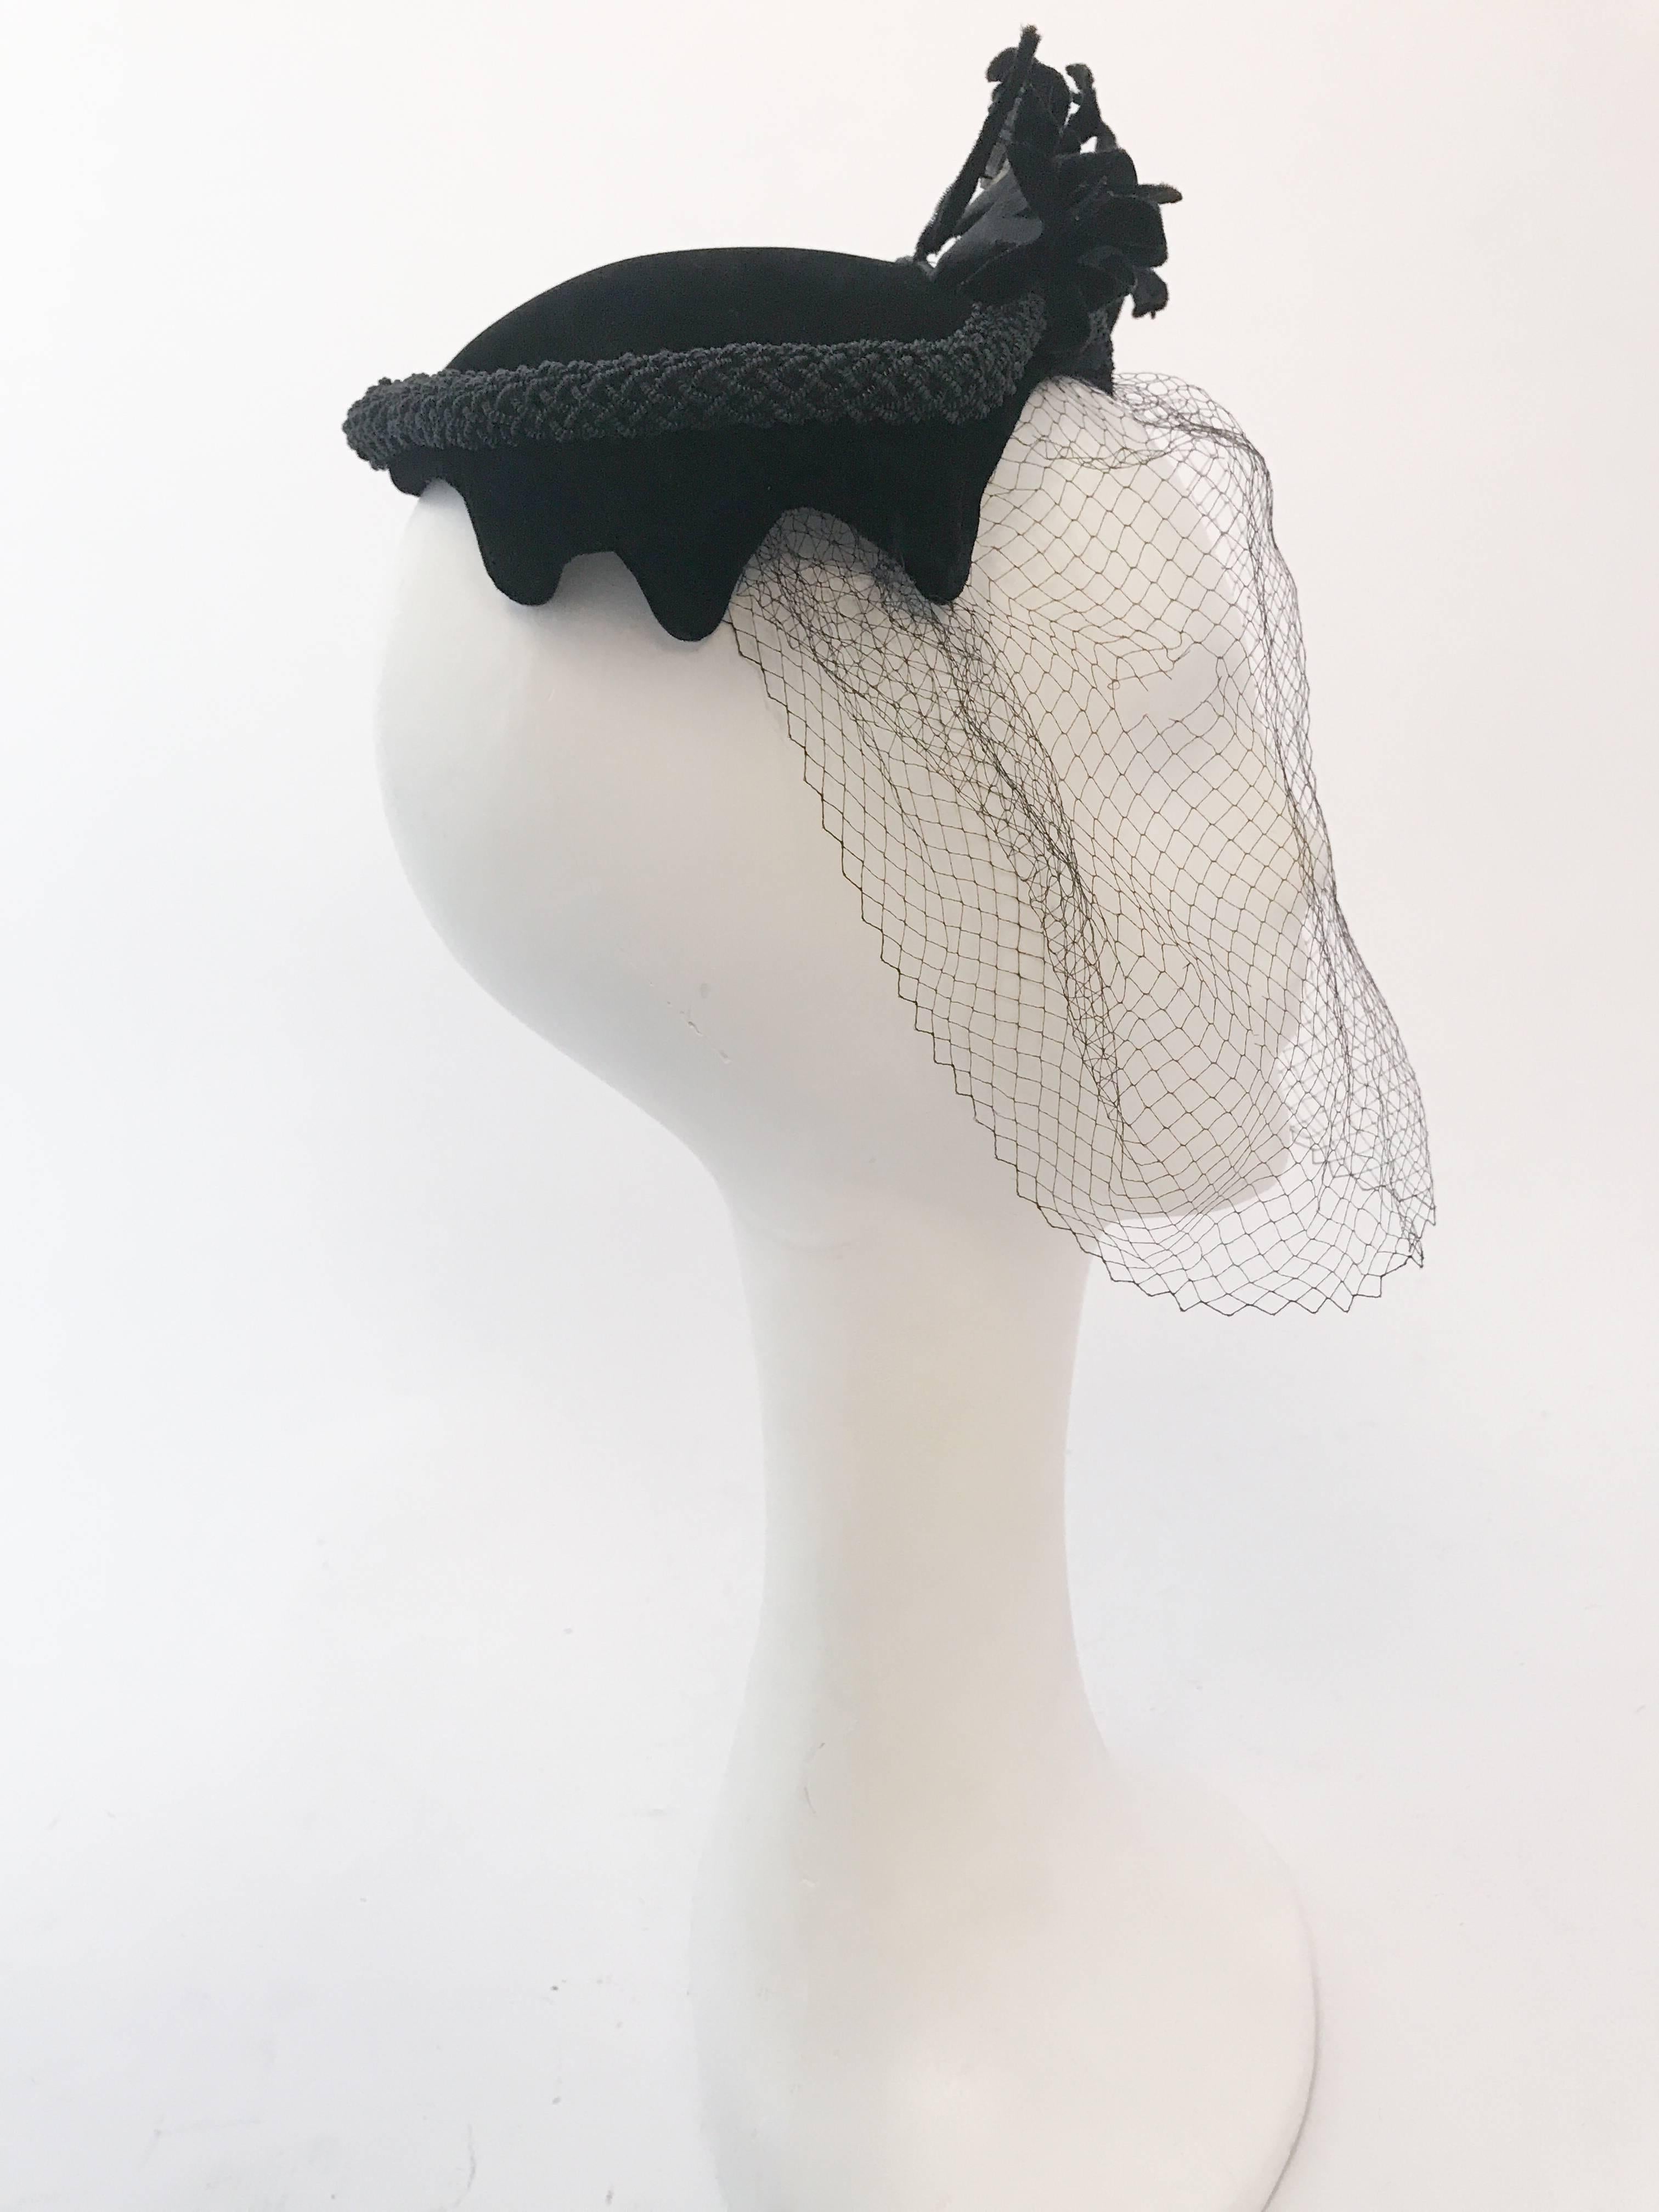 1950s Black Velvet Cocktail Hat with Veil and Flower Embellishments. Black velvet hat with matching veil, velvet flowers, and rhinestone embellishments.